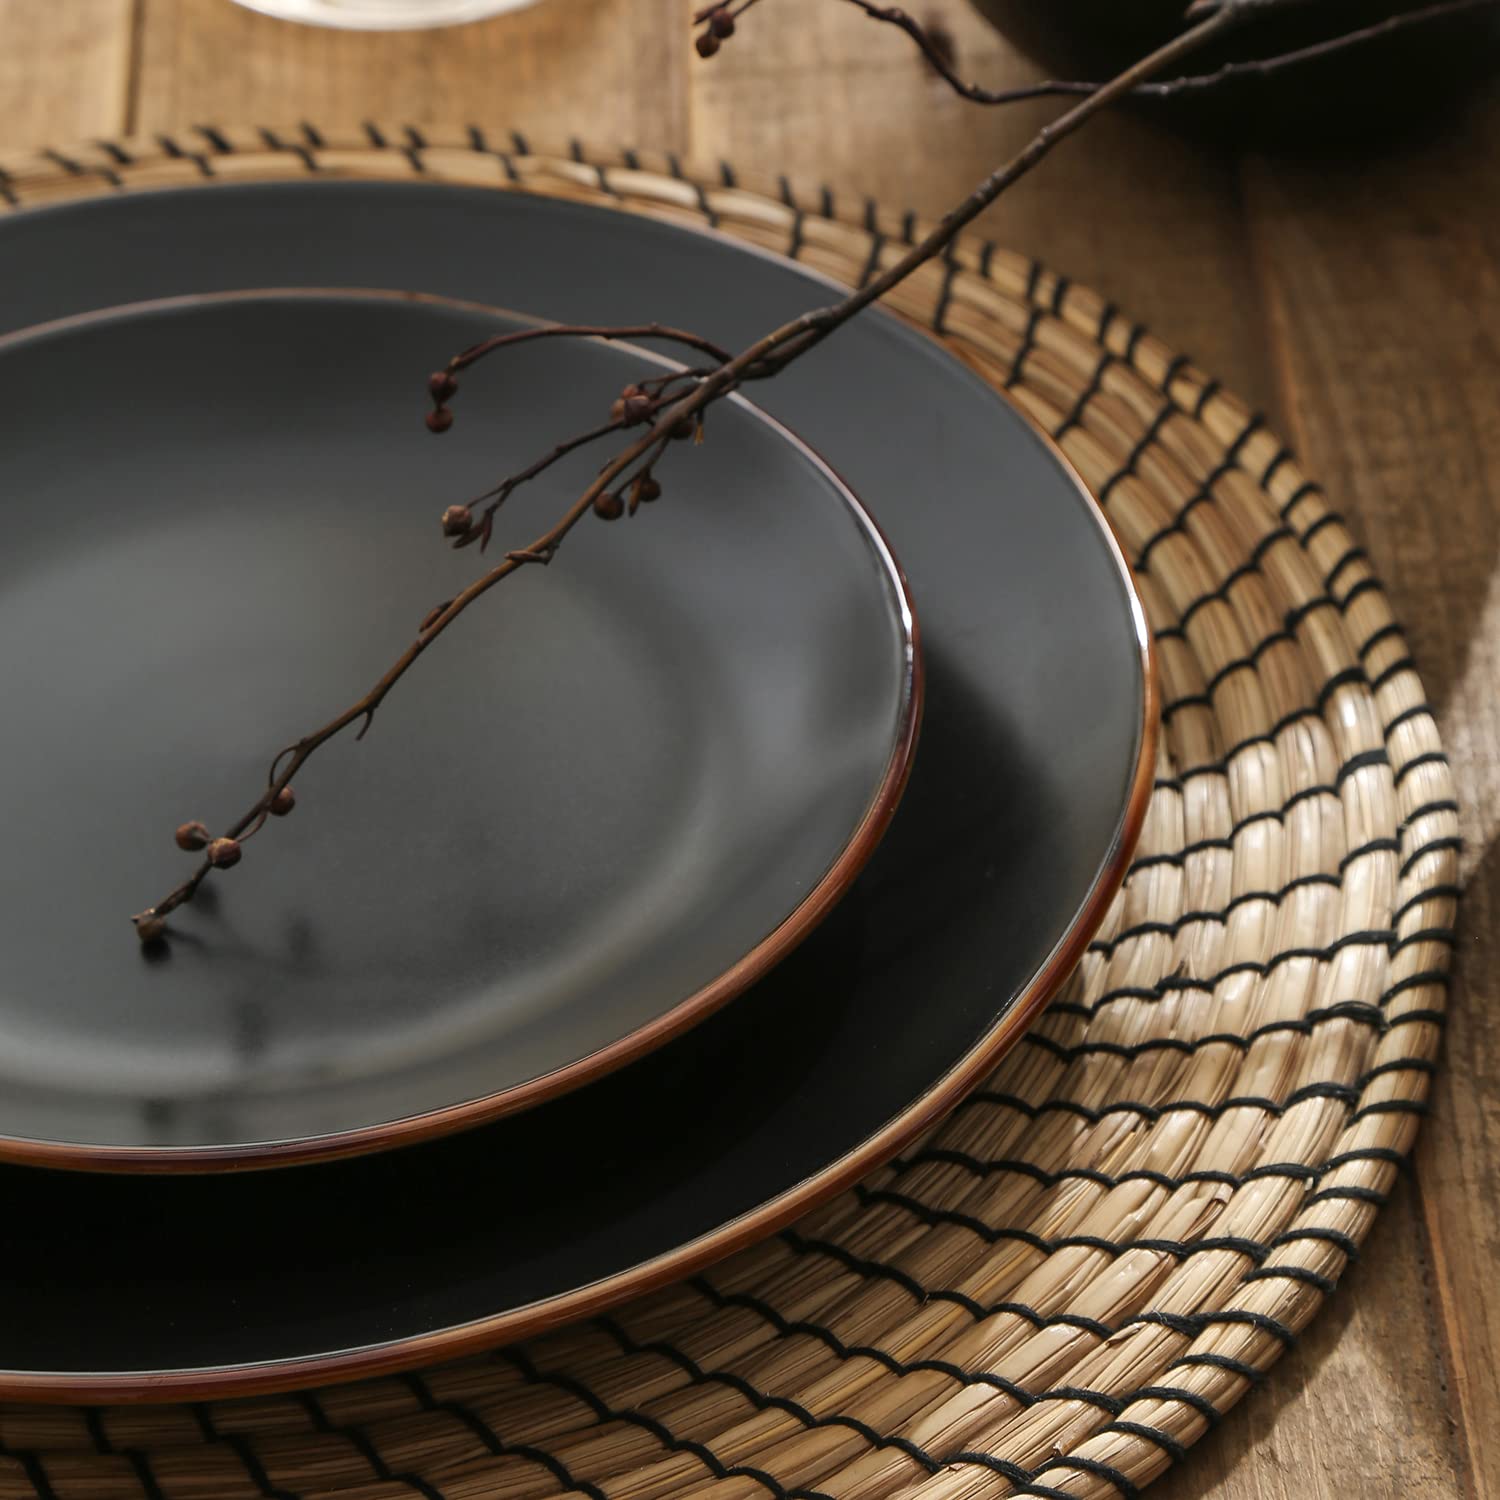 Stone + Lain Brasa Stoneware 16-Piece Round Dinnerware Set with Pasta Bowls, Black